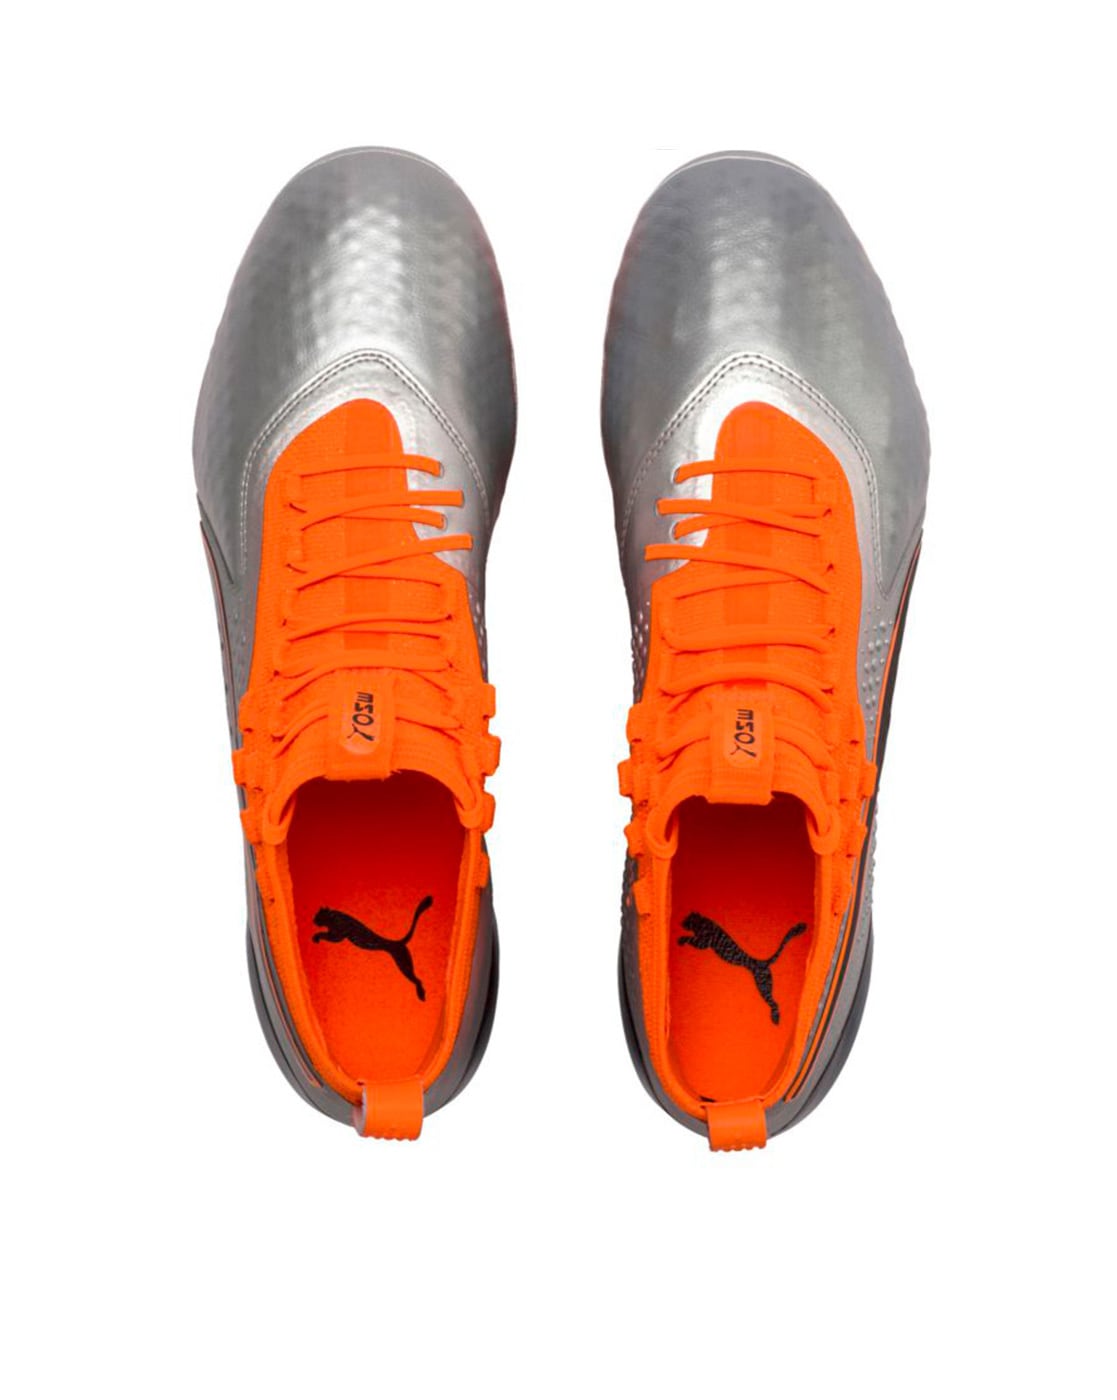 Buy \u003e orange puma running shoes Limit 